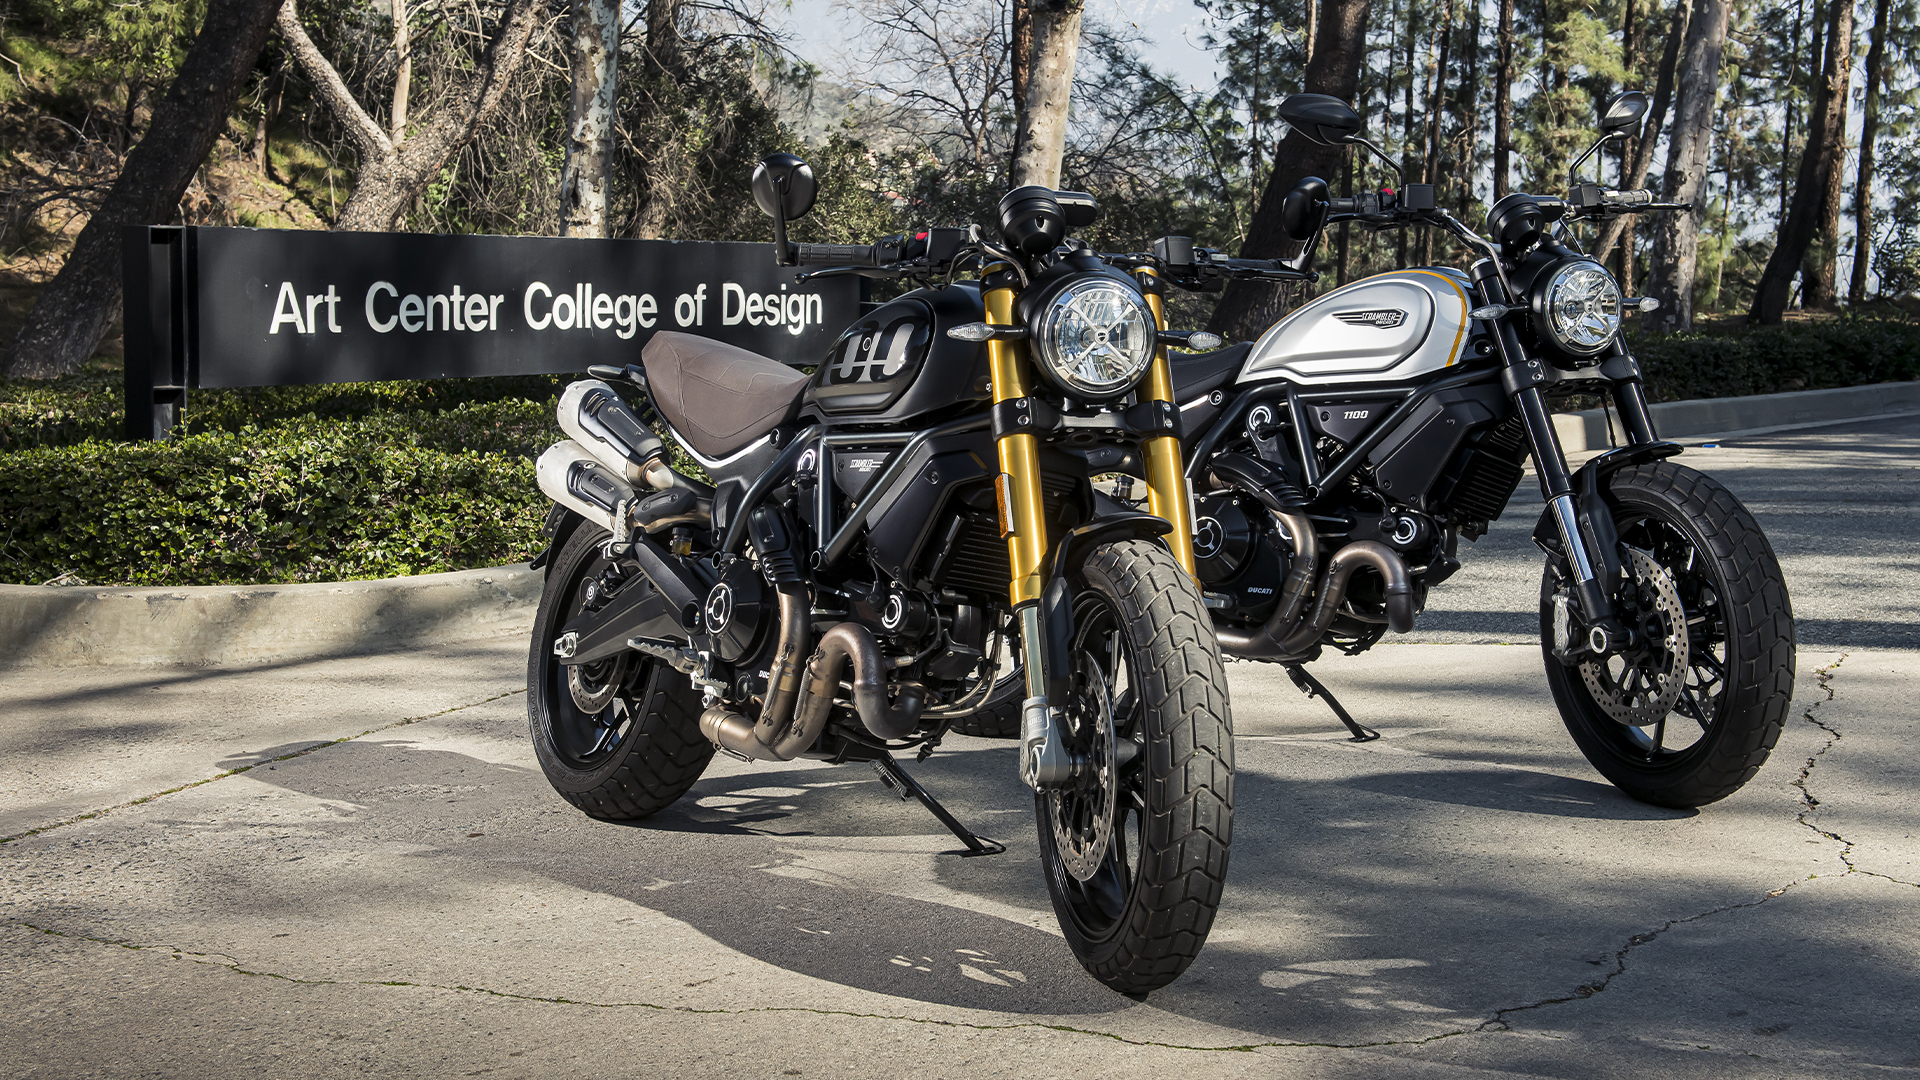 New Ducati Scrambler 1100 Pro And Sport Pro Are Focus Of Master Class At Artcenter College Of Design In Pasadena California